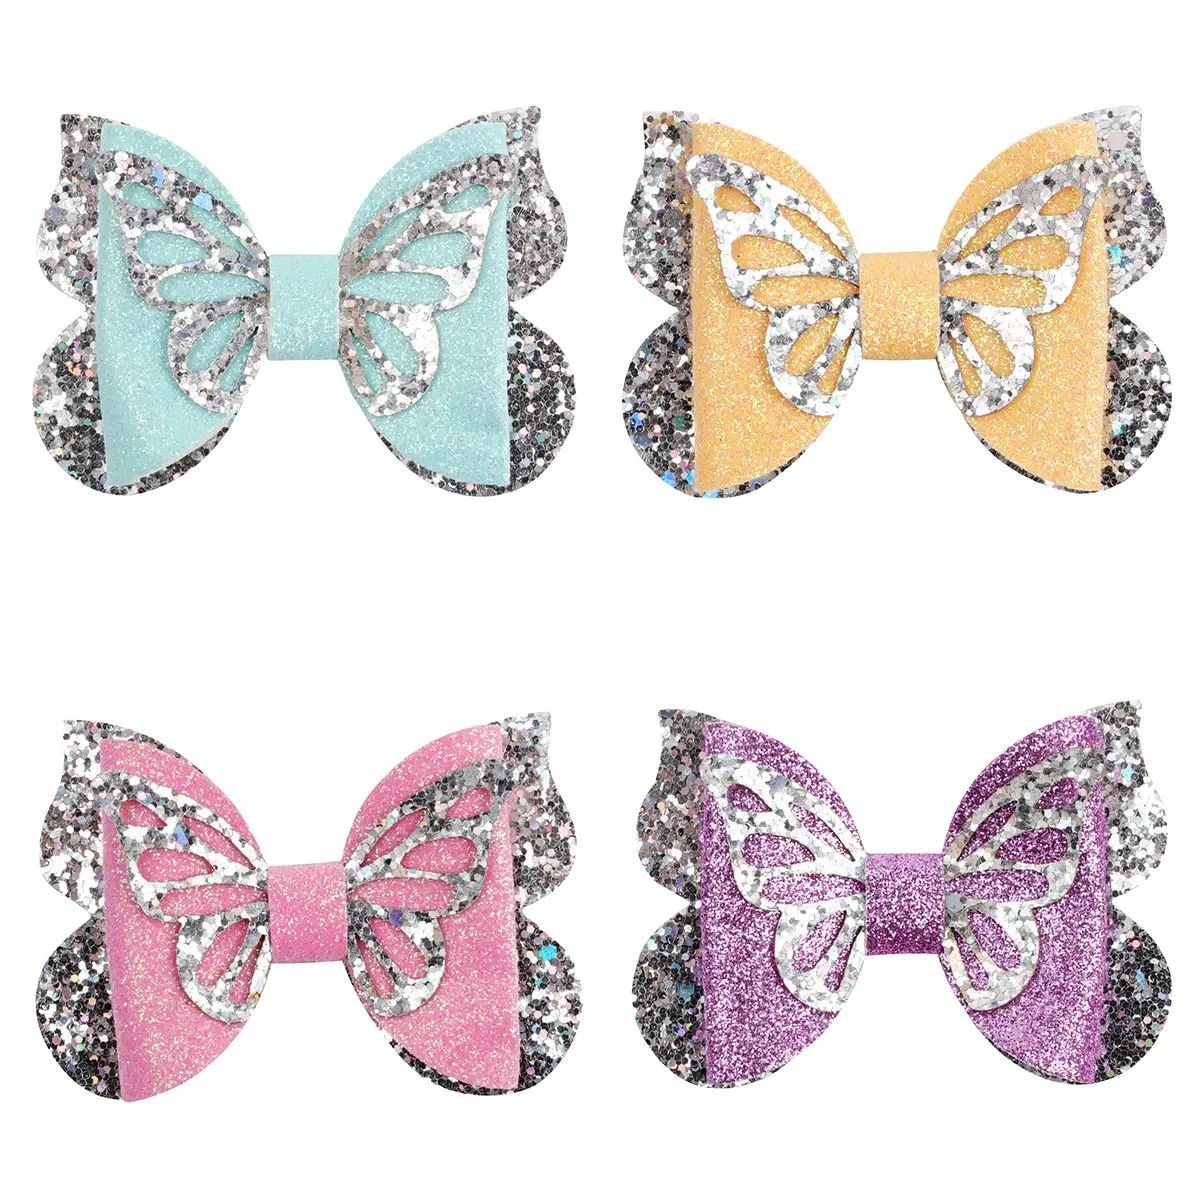 2022 neues Design 3 Zoll Haarnadeln Schmetterlings form Bogen Glitter Pailletten Haars pangen für Mädchen Haarschmuck